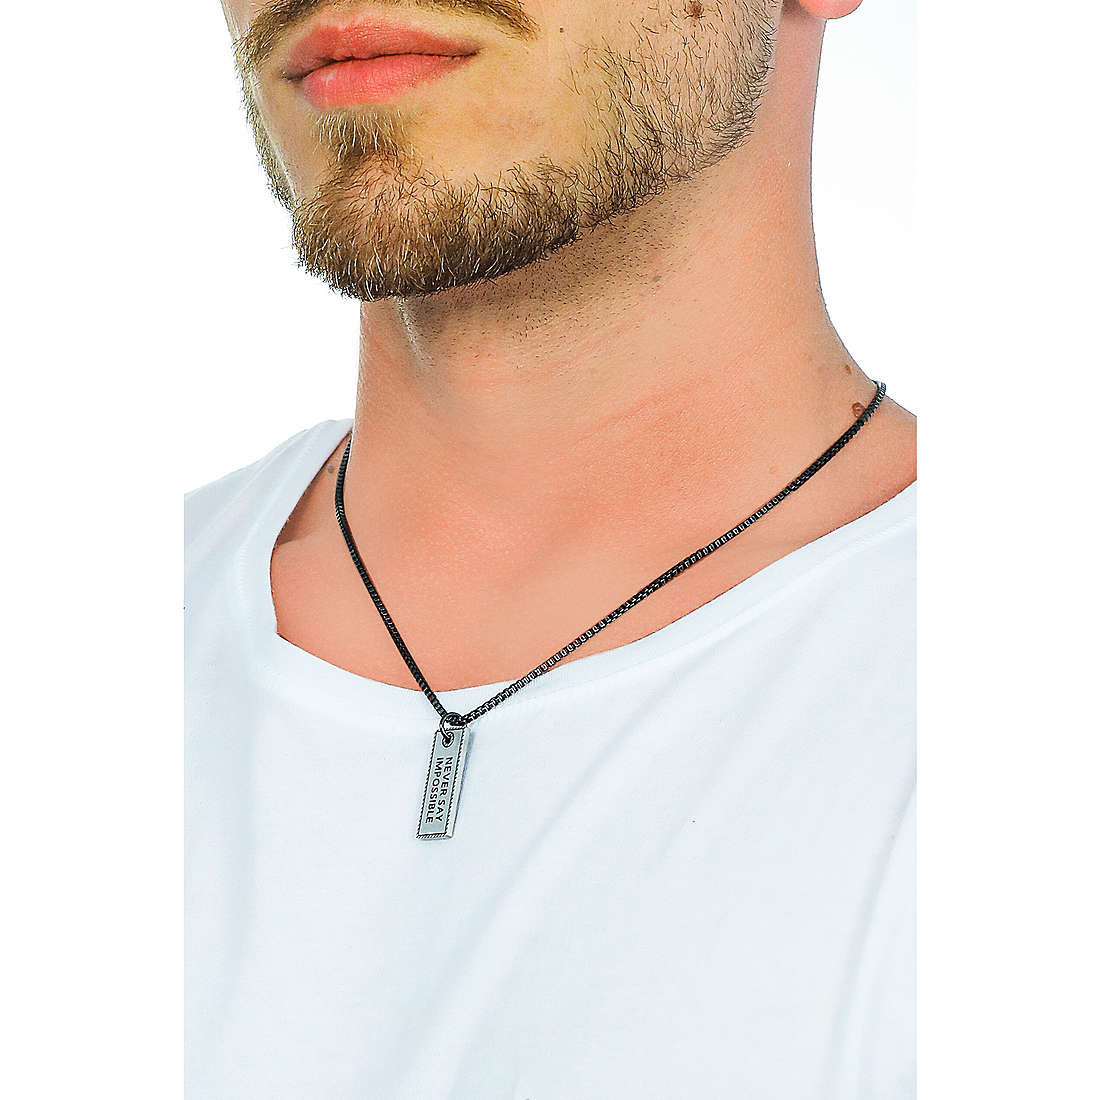 Kidult necklaces Philosophy man 751213 wearing